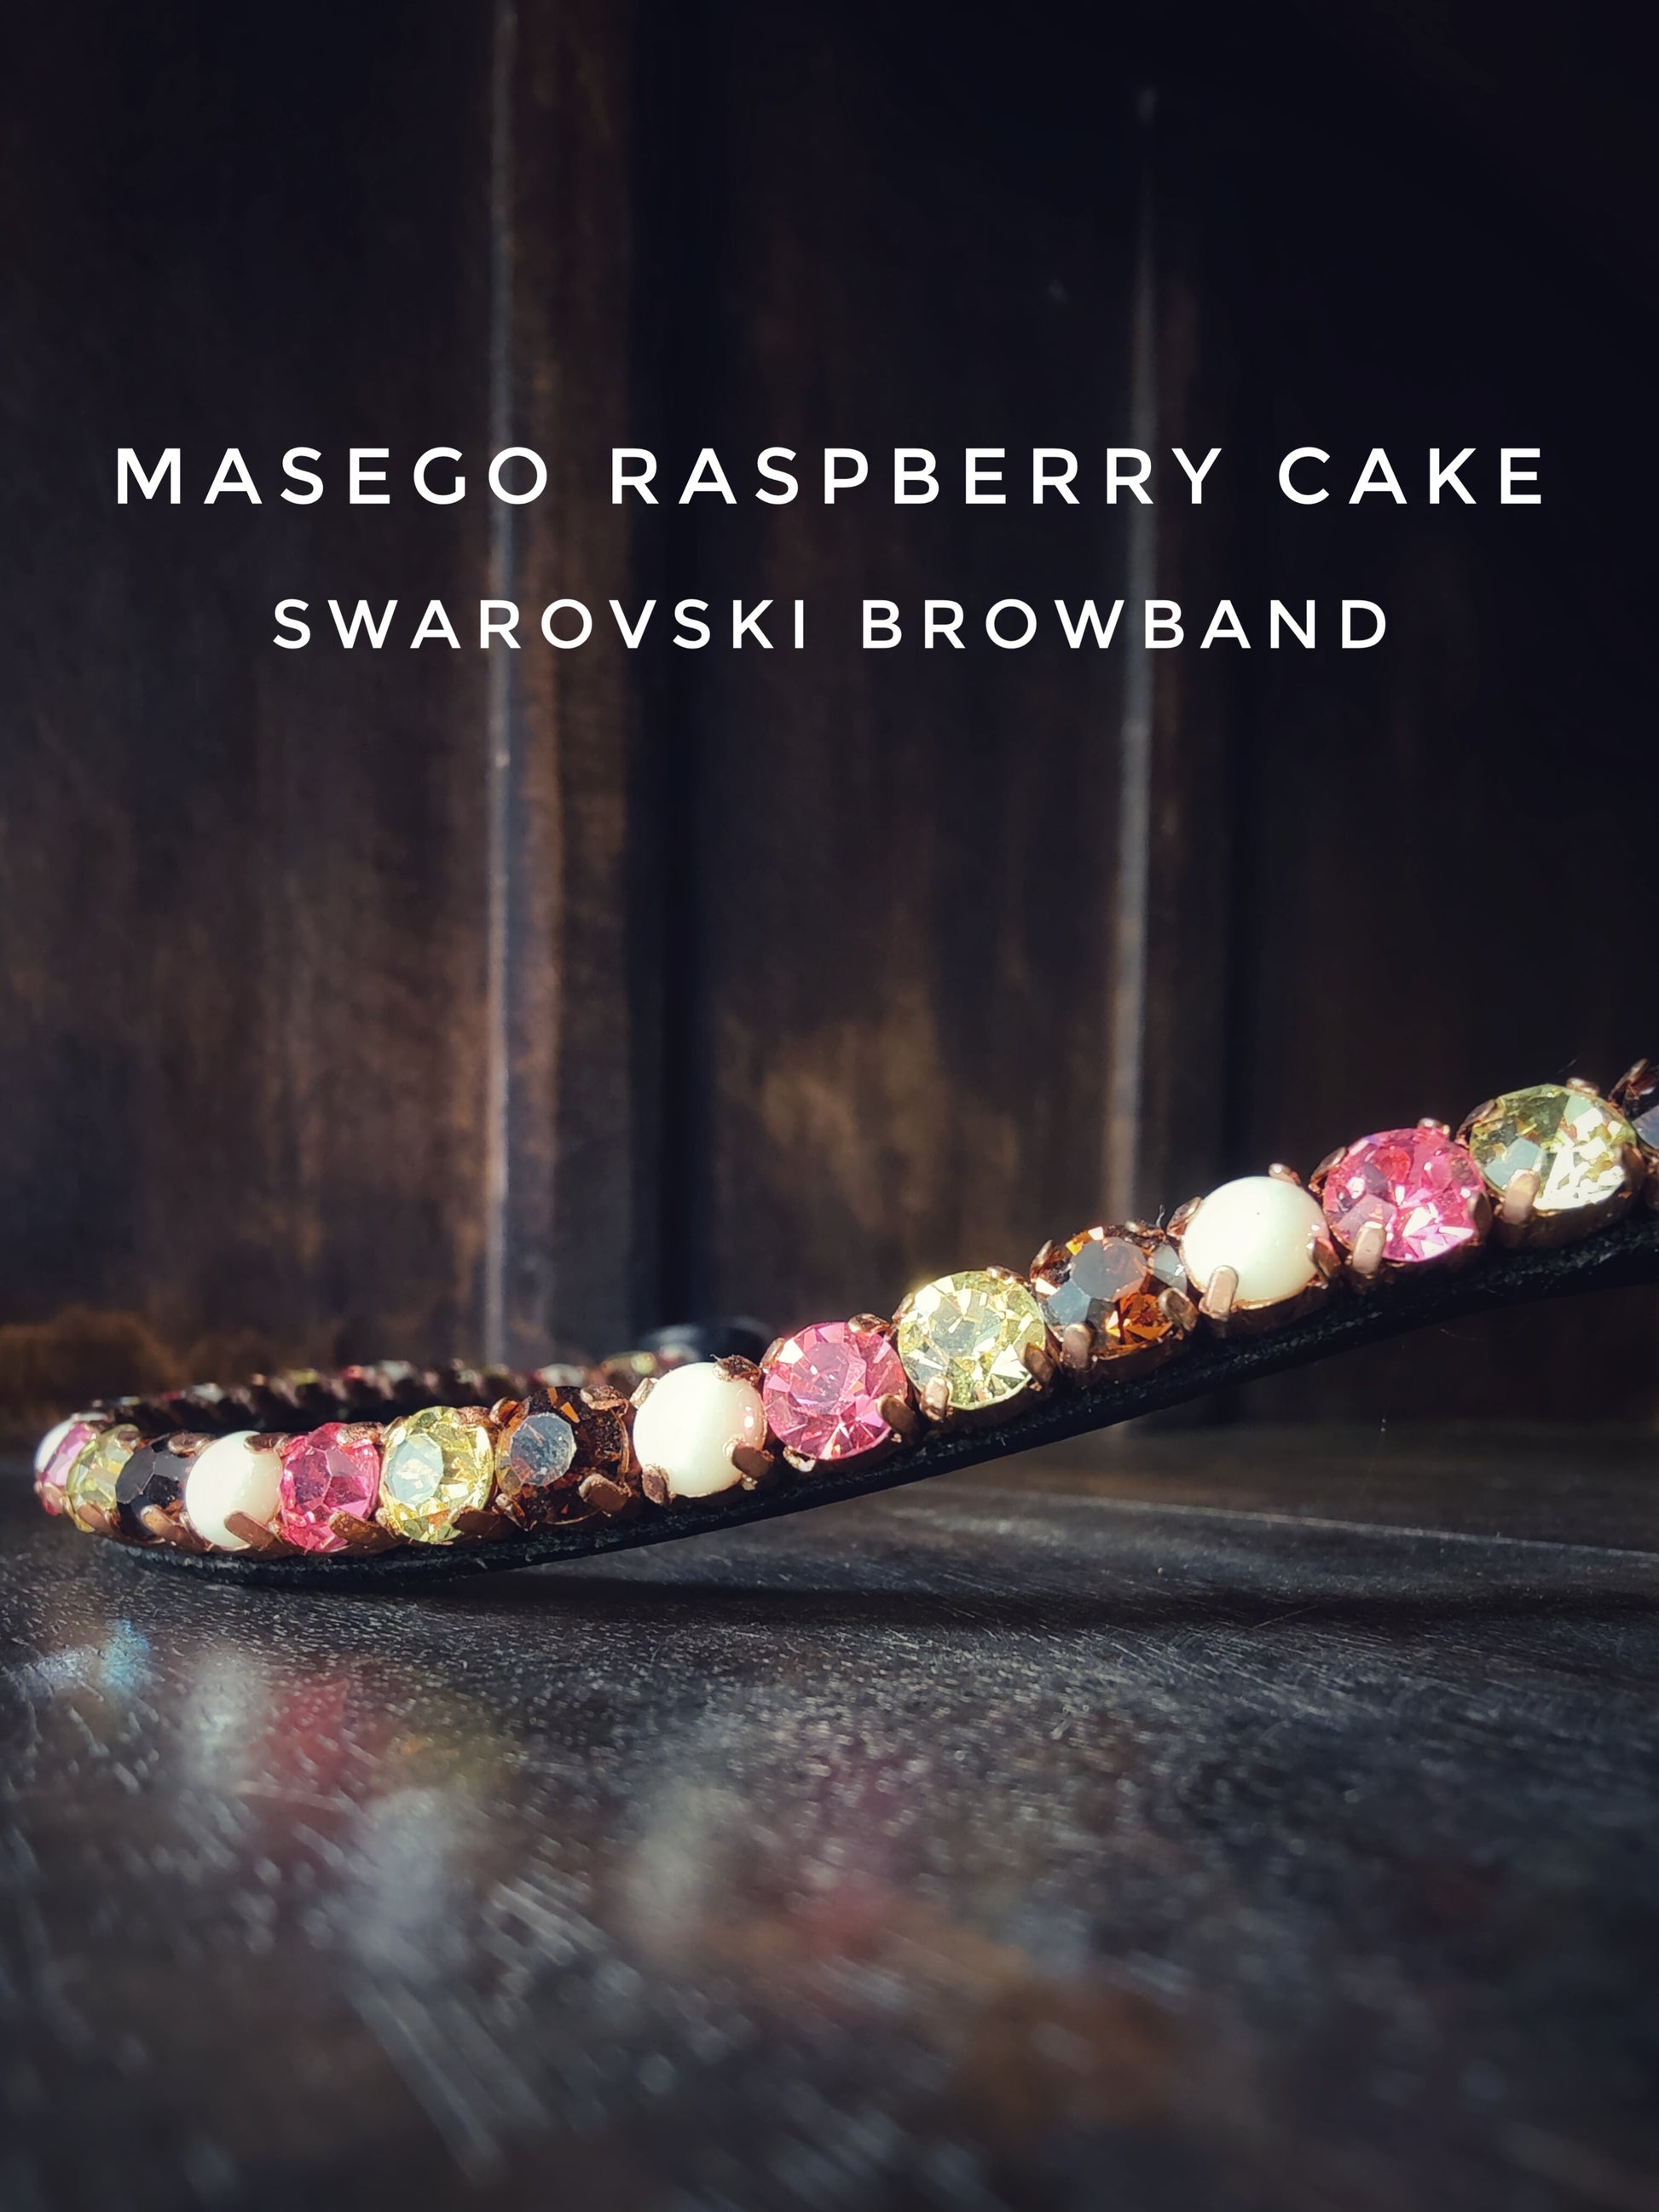 MASEGO horsewear Raspberry cake browband - MASEGO horsewear